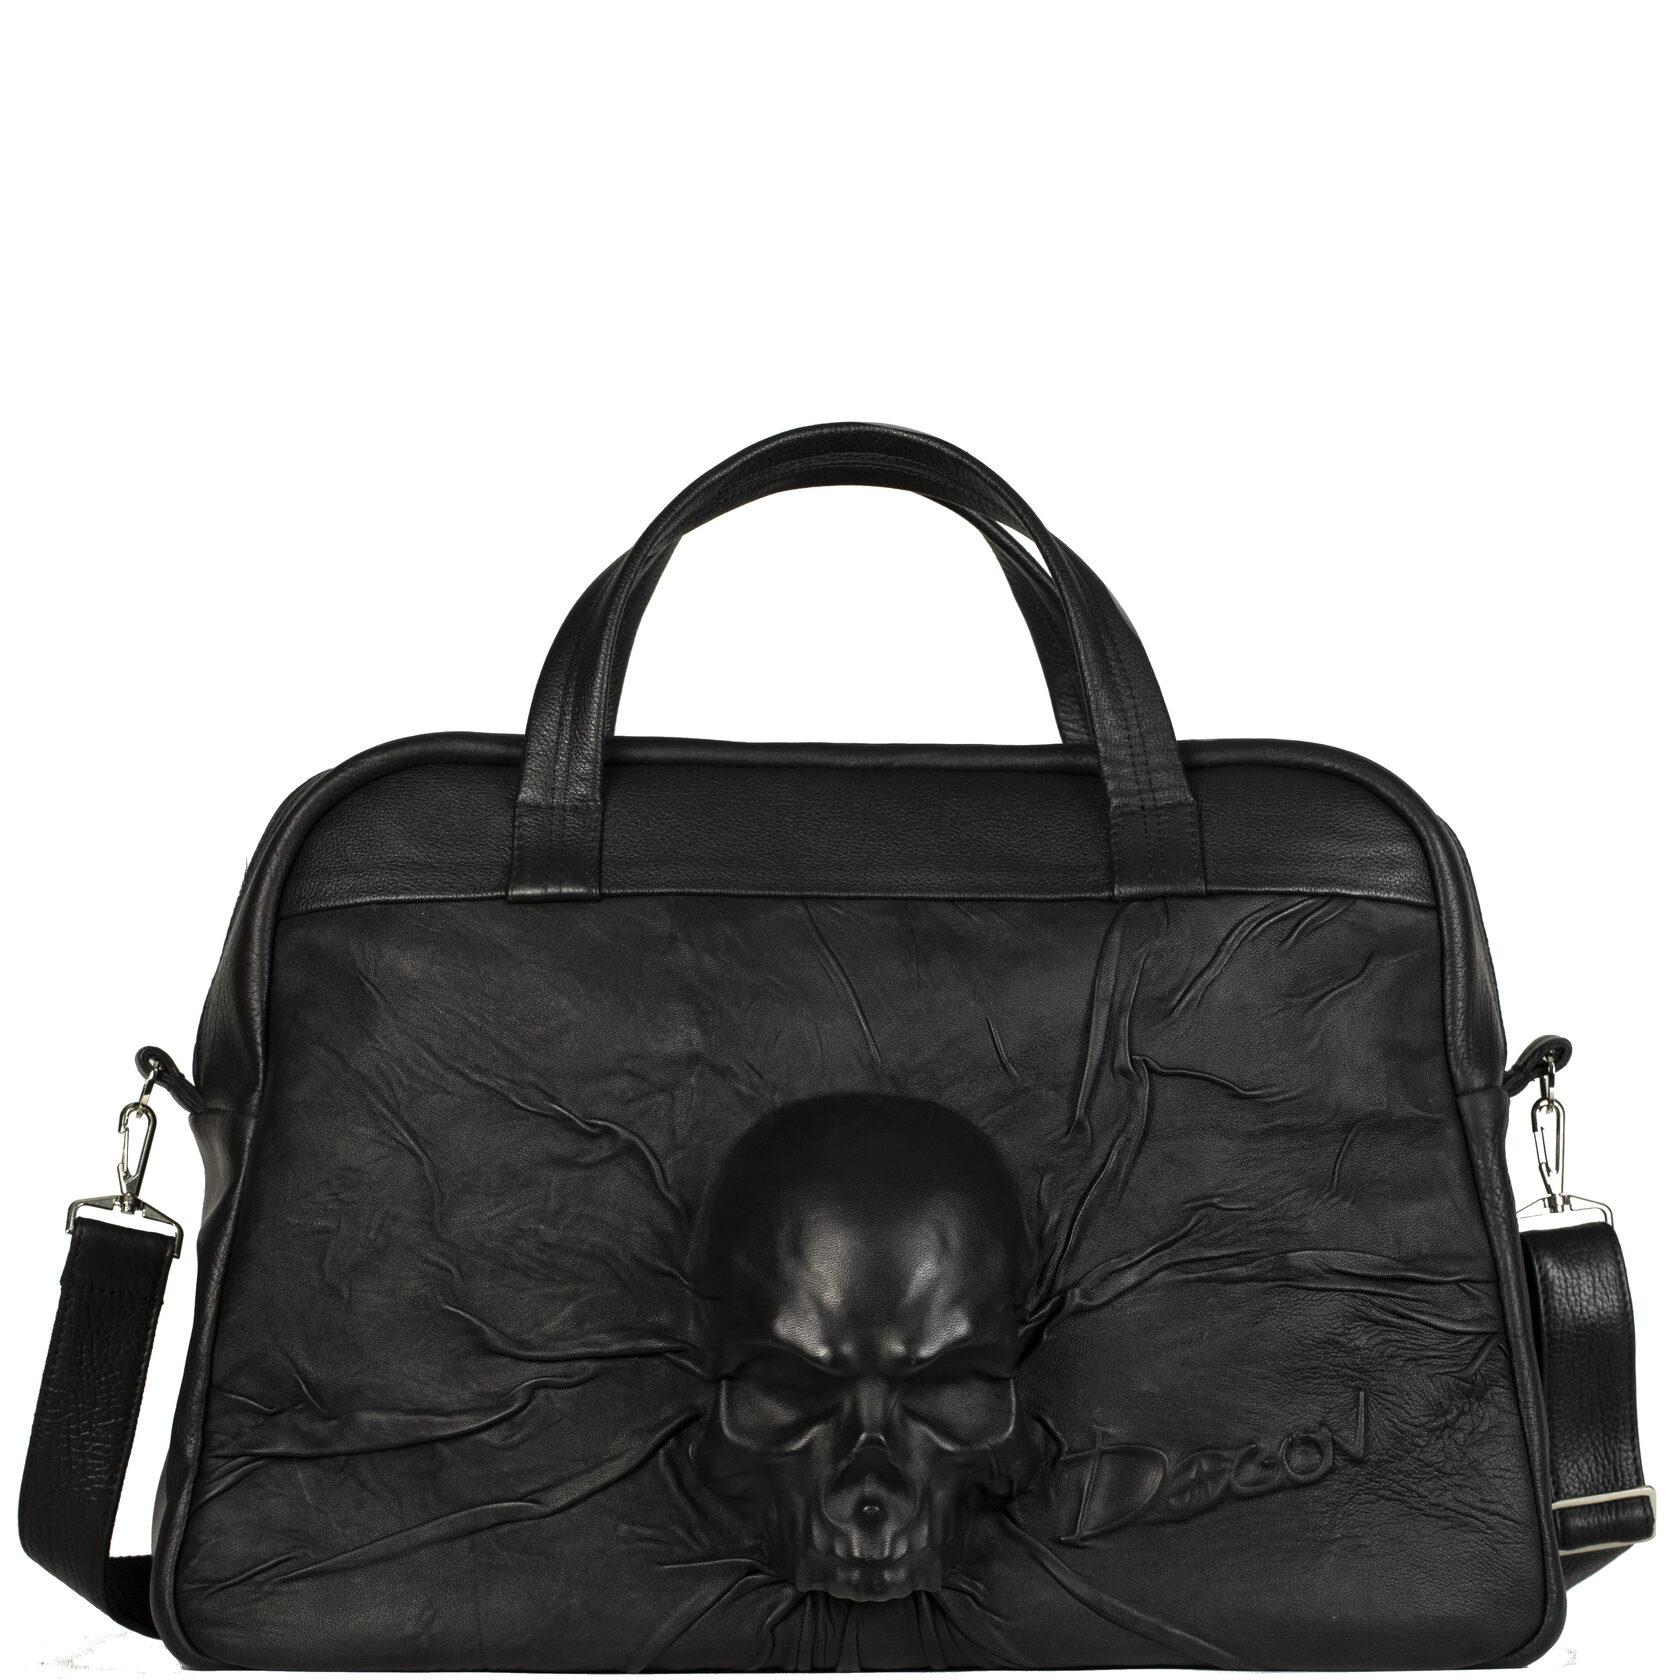 

Дорожная сумка унисекс DAGON skull diablo черная, 57х37х20 см, Черный, skull diablo 0036